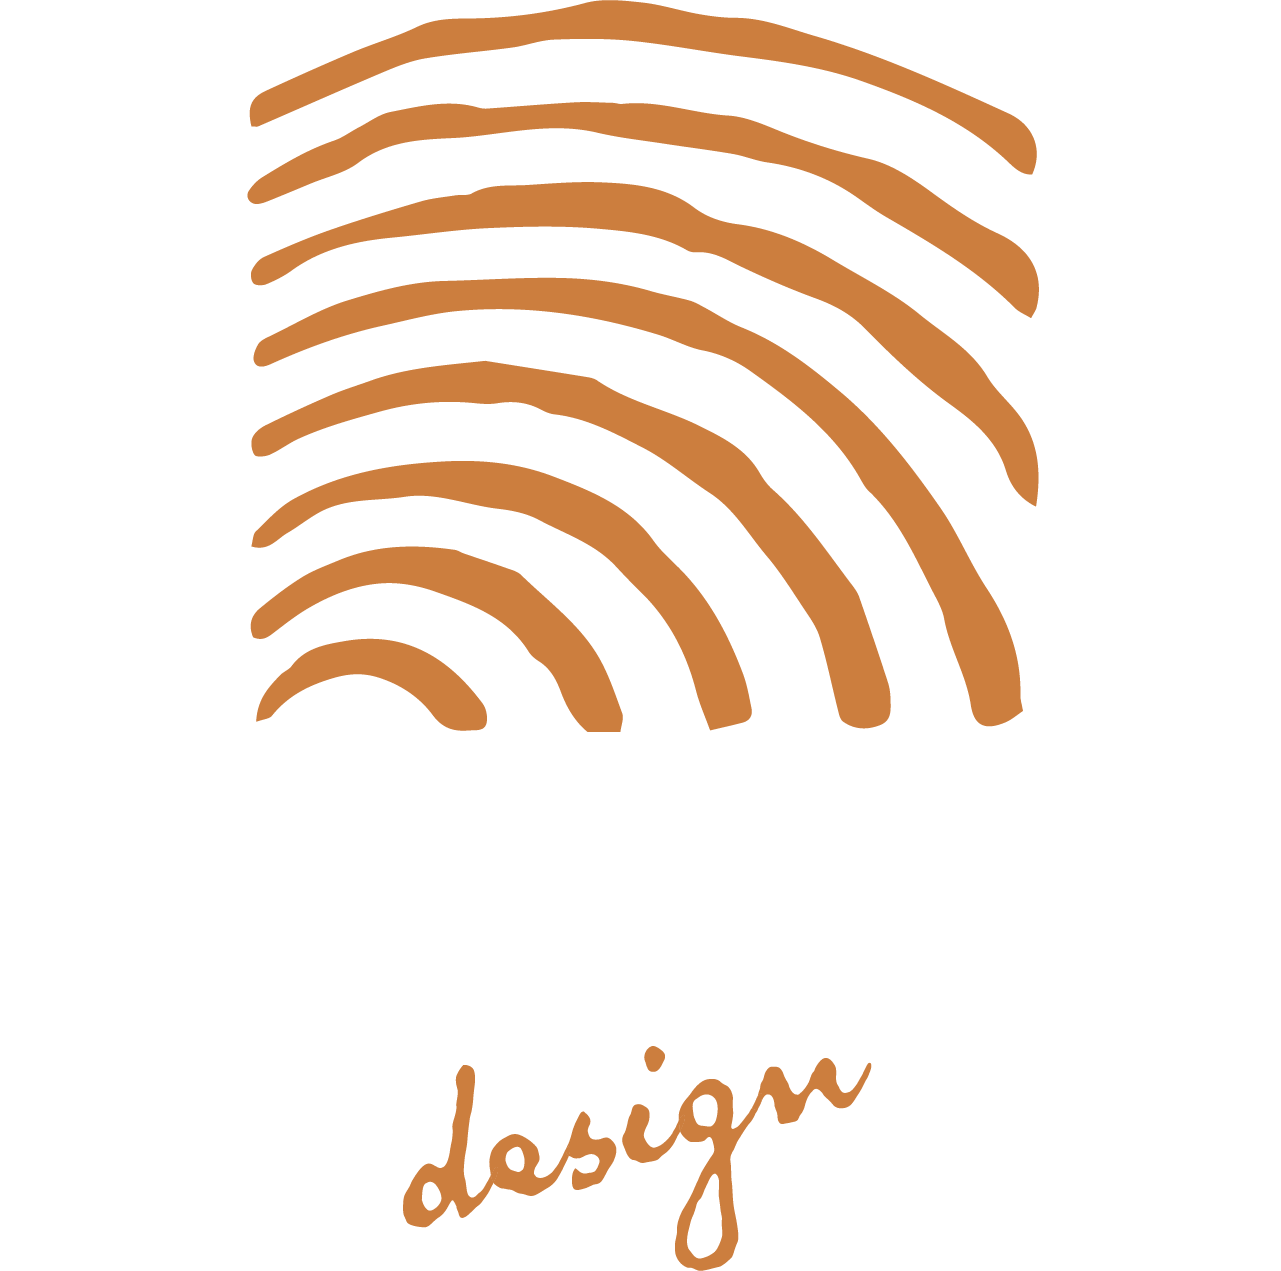 Engel Wood Design